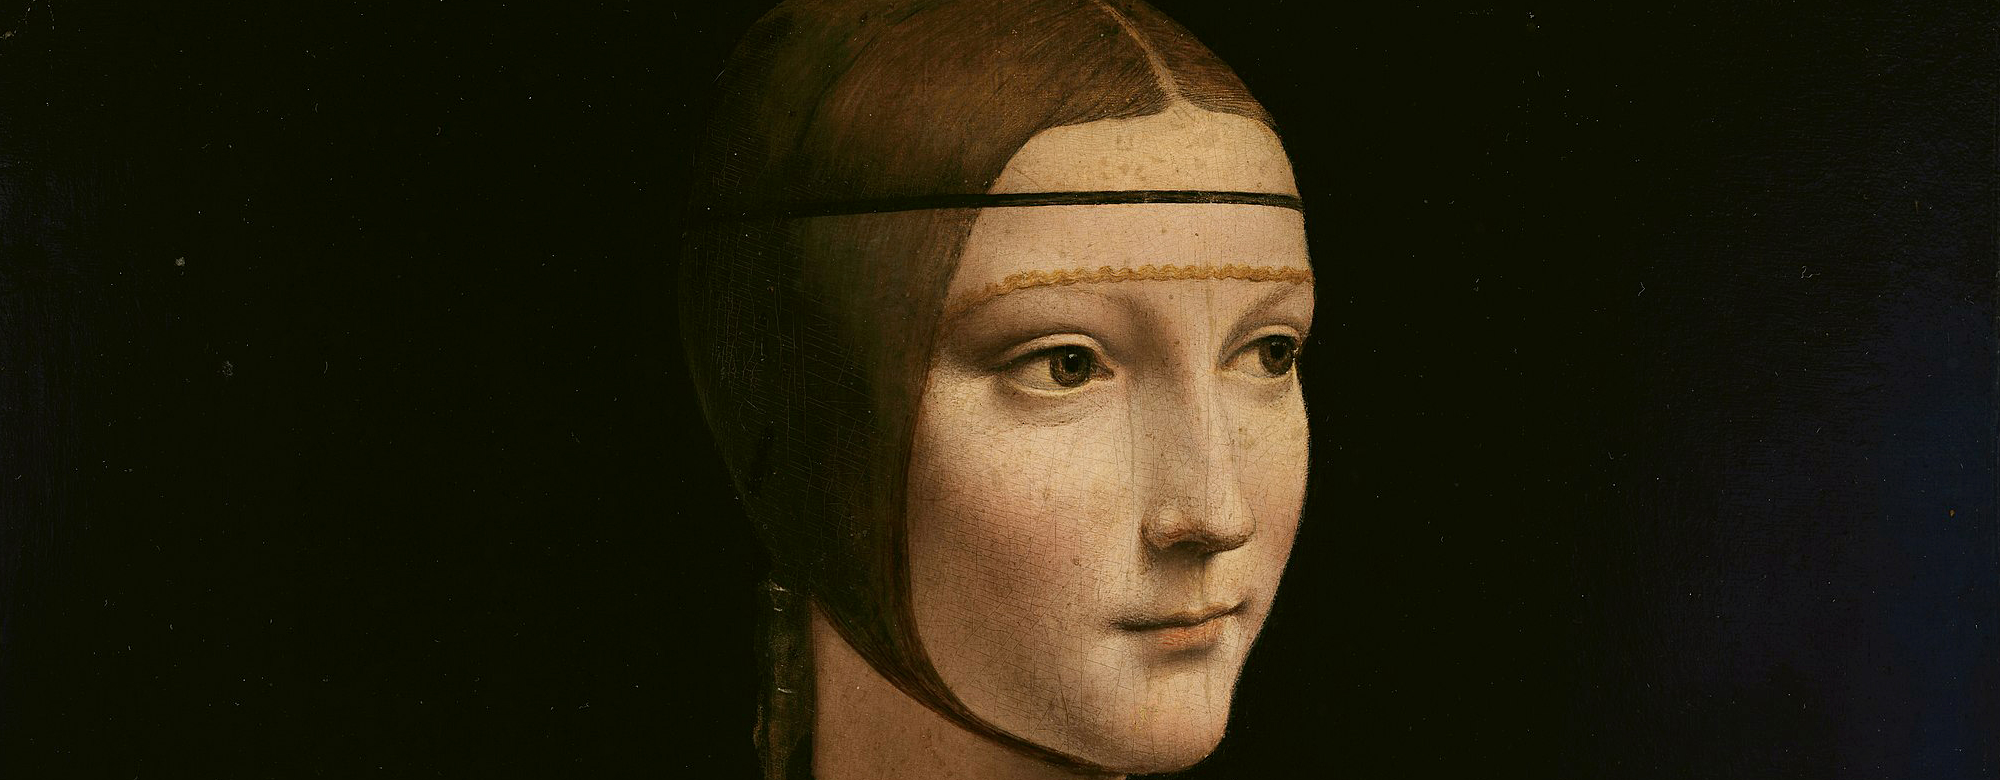 Leonardo da Vinci's Lady with an Ermine